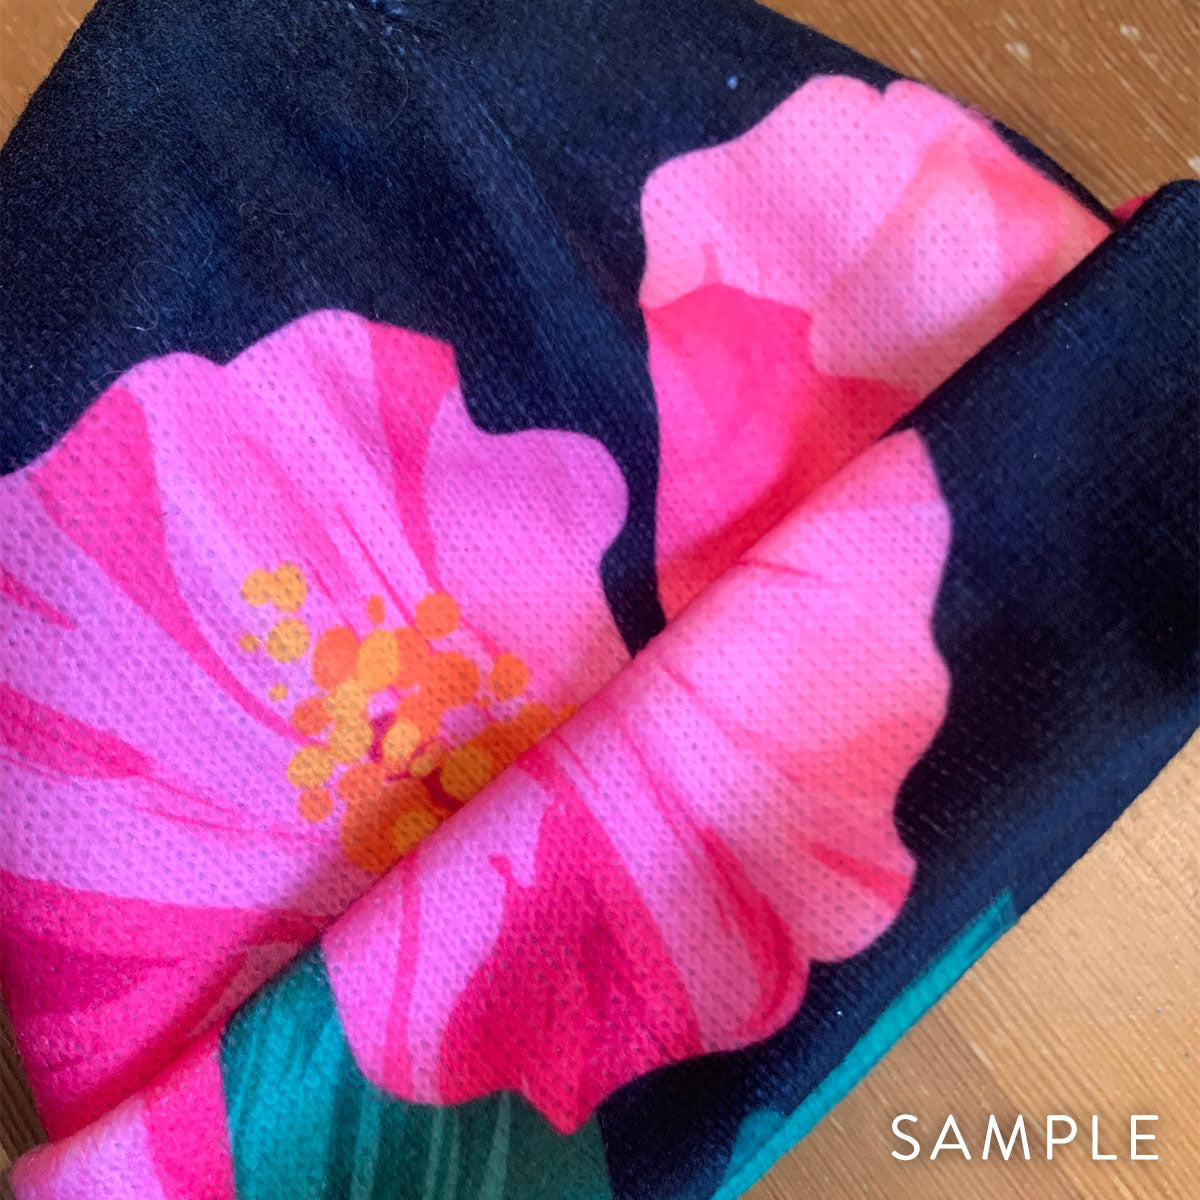 CNMI Saipan Tinian Rota Blue Tribal Unisex Crochet Knit Beanie Cap